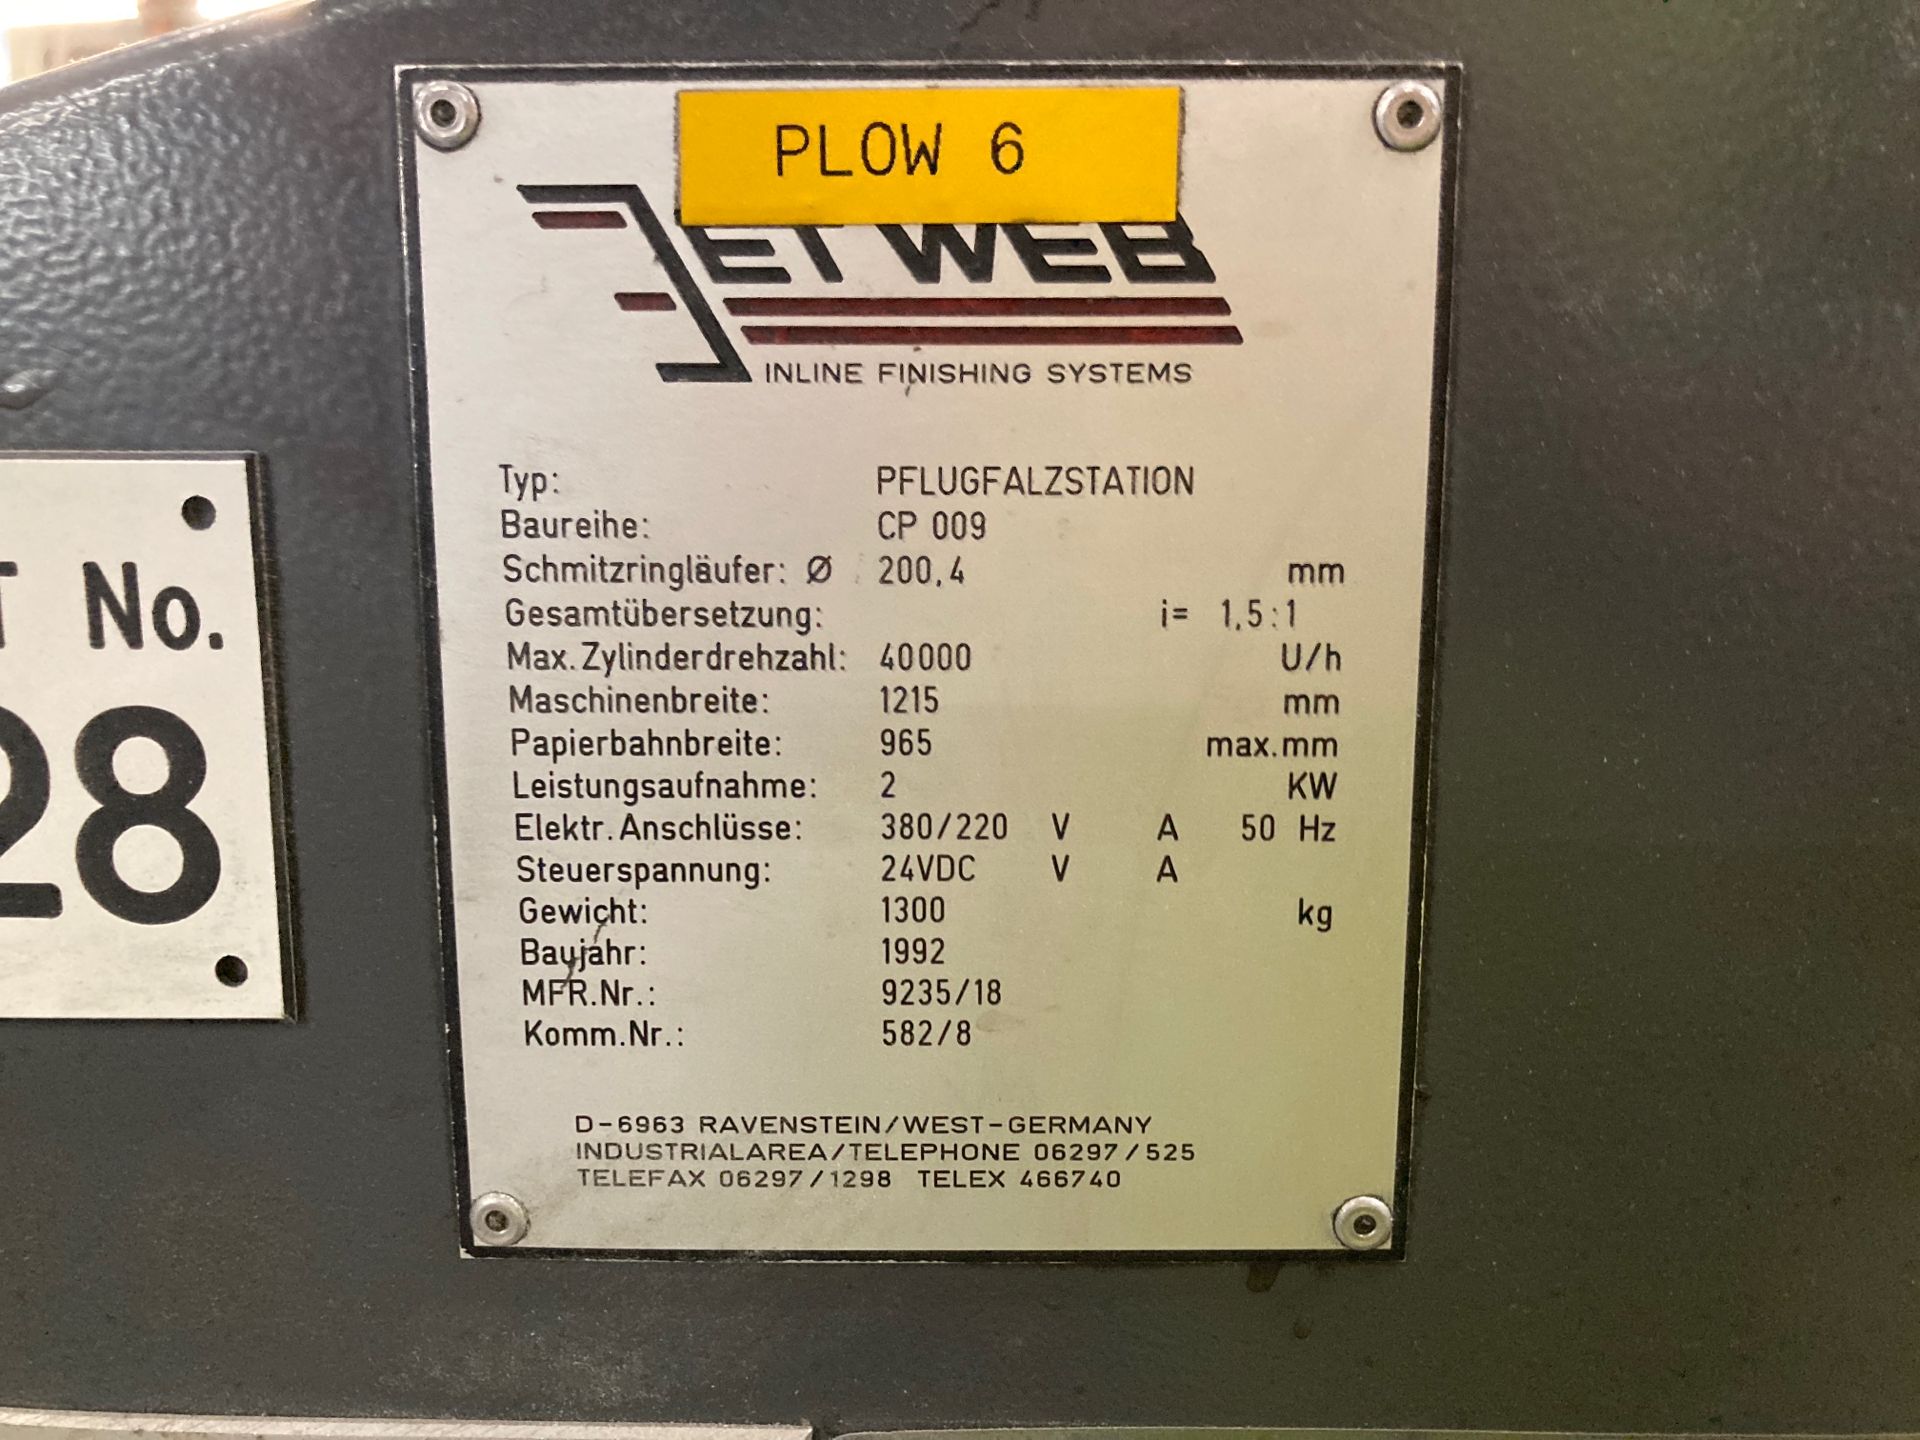 Jet Web Plow Machine - Image 5 of 5